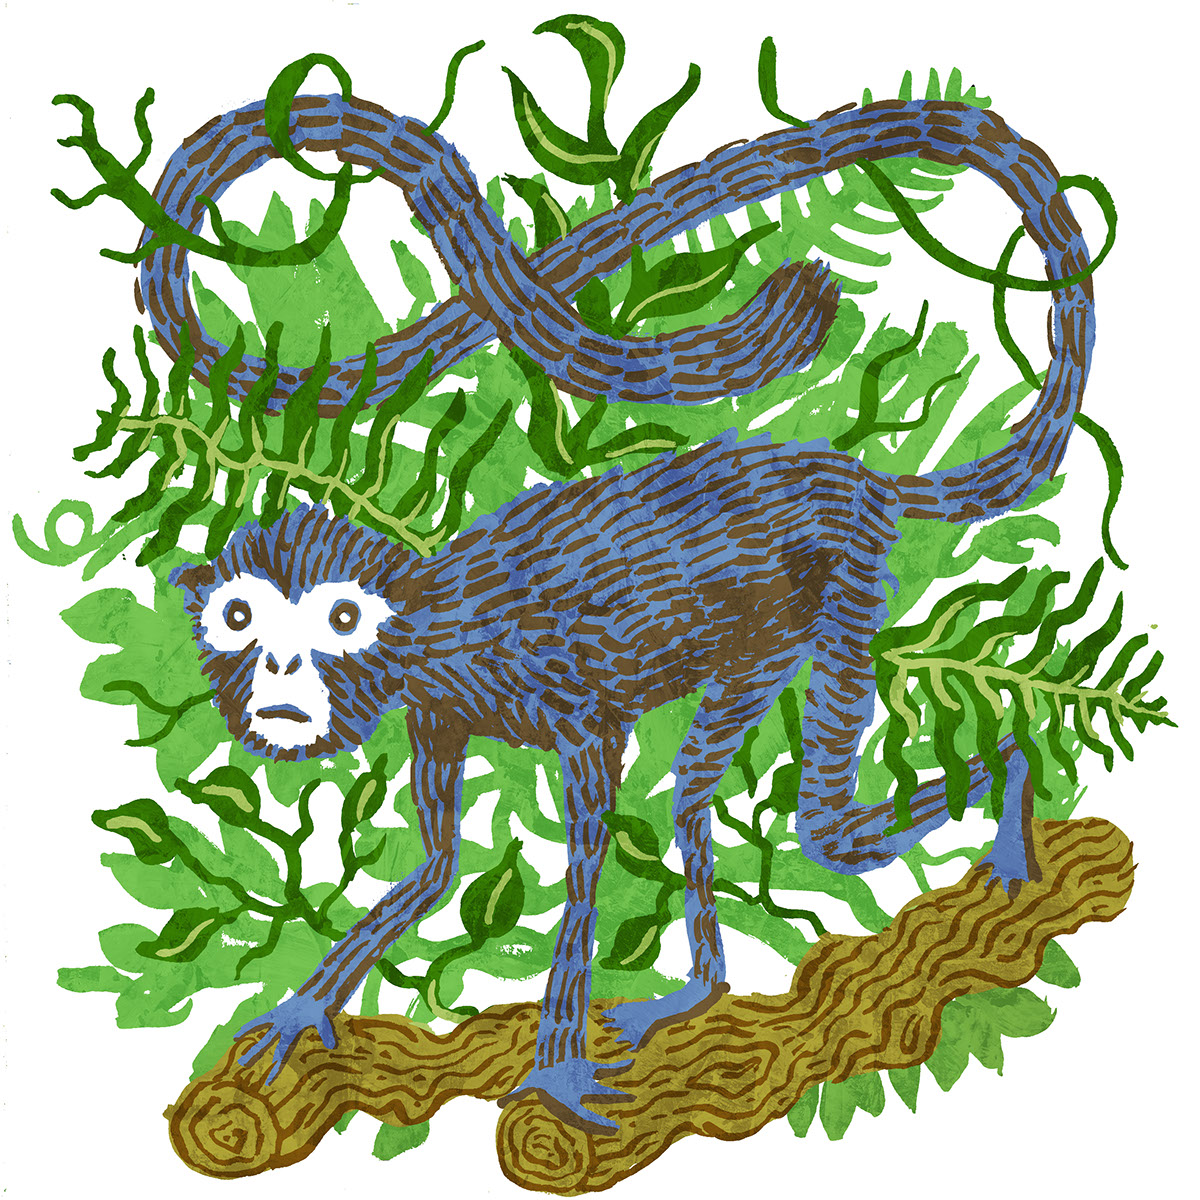 WWF World Wildlife Foundation toy puppet jaguar macaw monkey sloth Amazon rainforest Sustainability green adaa_2015 adaa_school western_washington_university adaa_country united_states